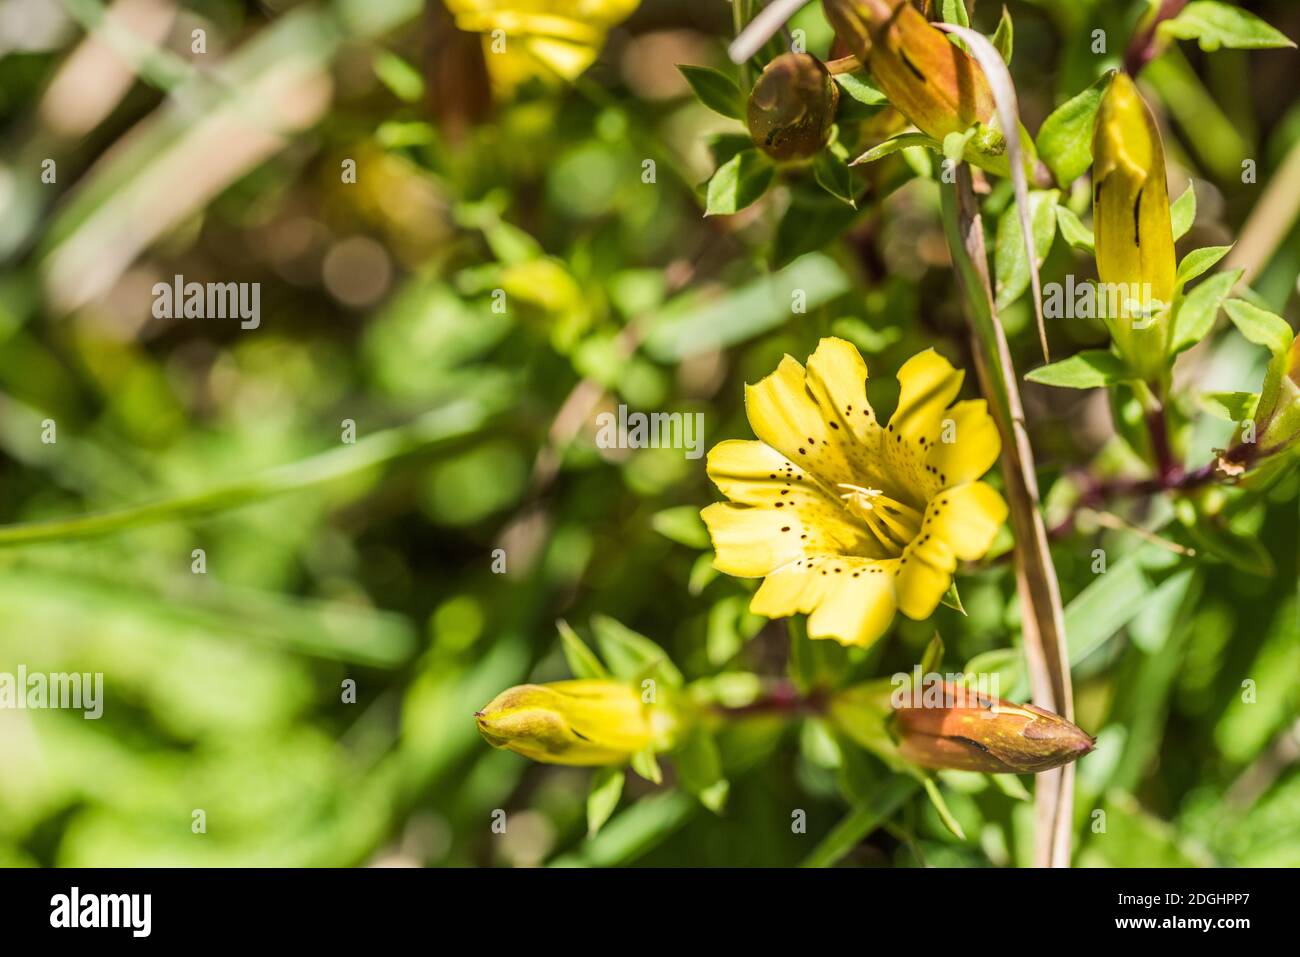 Native species of yellow Gentiana flowers Stock Photo